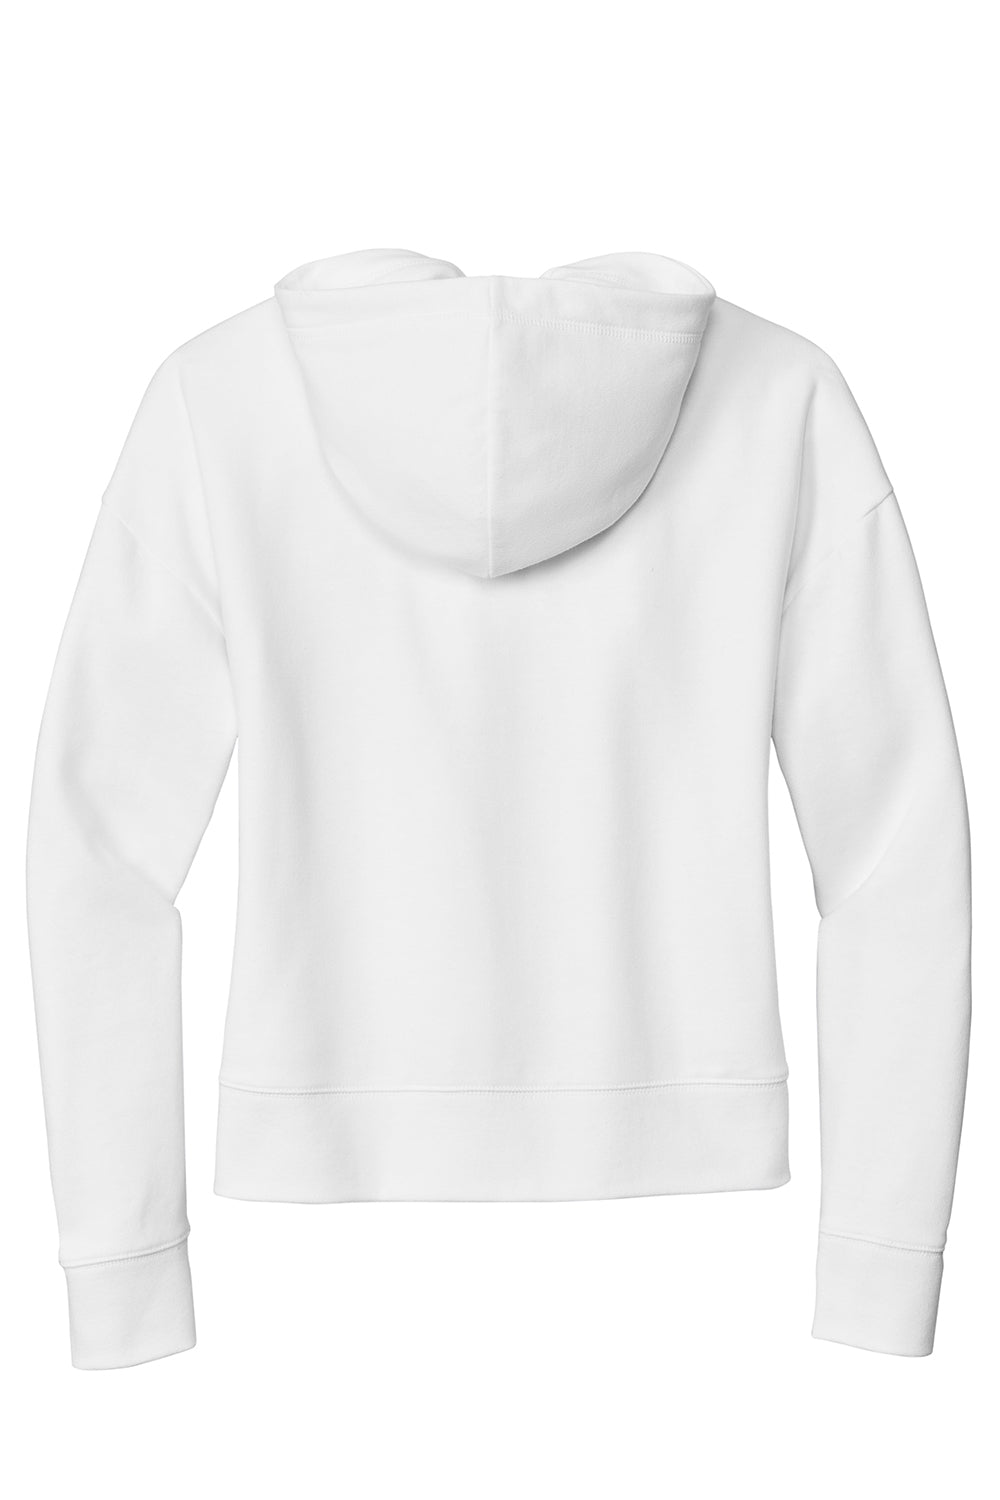 New Era LNEA550 Womens Comeback Fleece Hooded Sweatshirt Hoodie White Flat Back